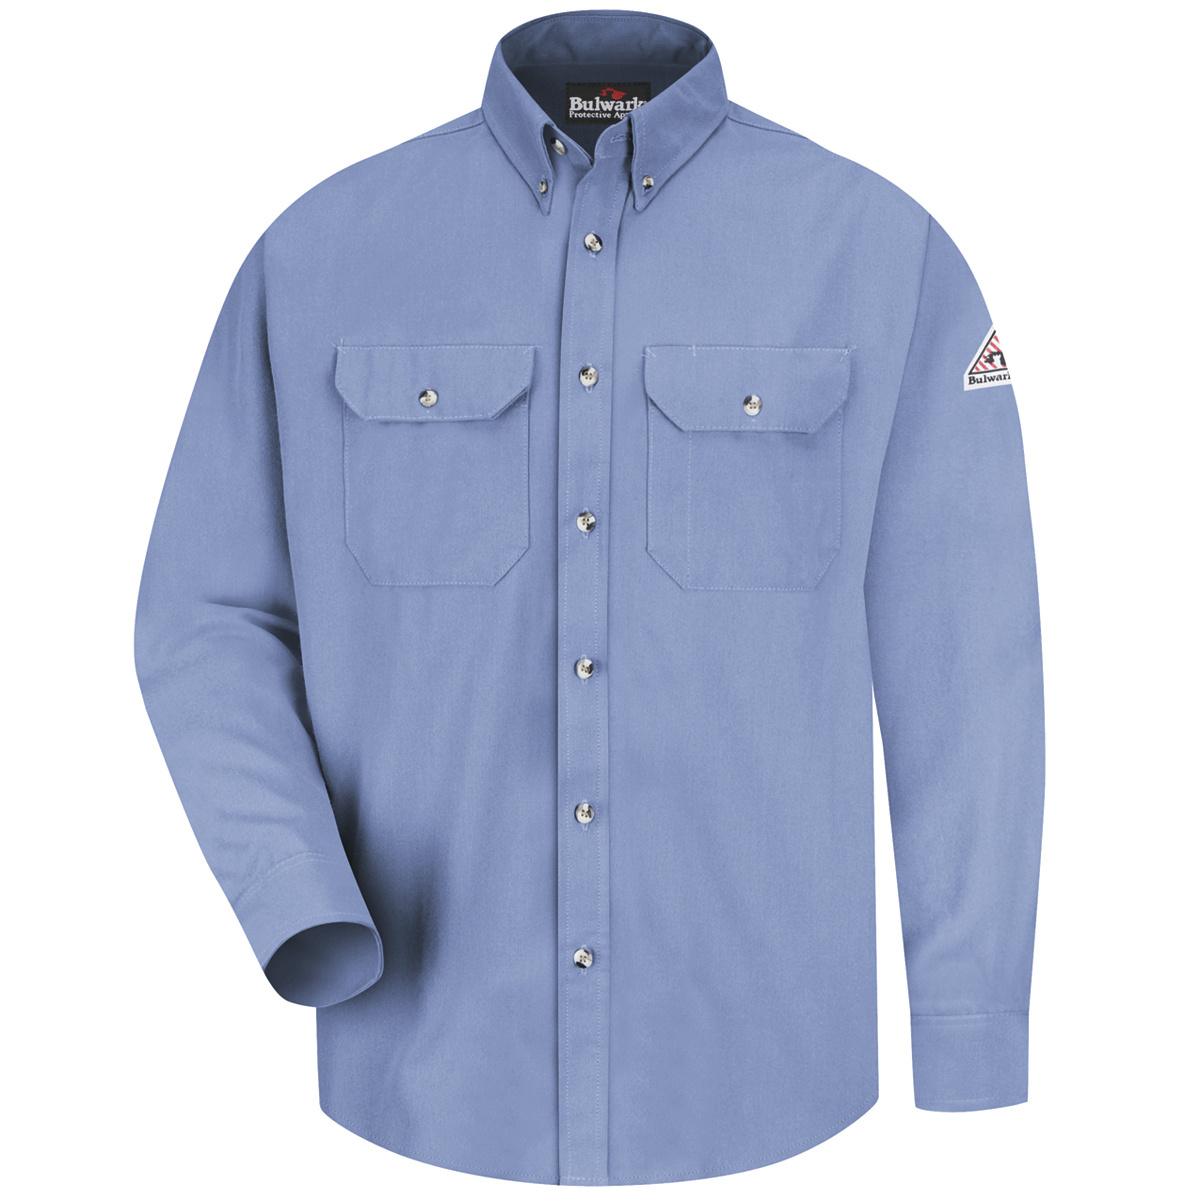 Bulwark® 2X Tall Light Blue Modacrylic/Lyocell/Aramid Flame Resistant Dress Uniform Shirt With Button Front Closure